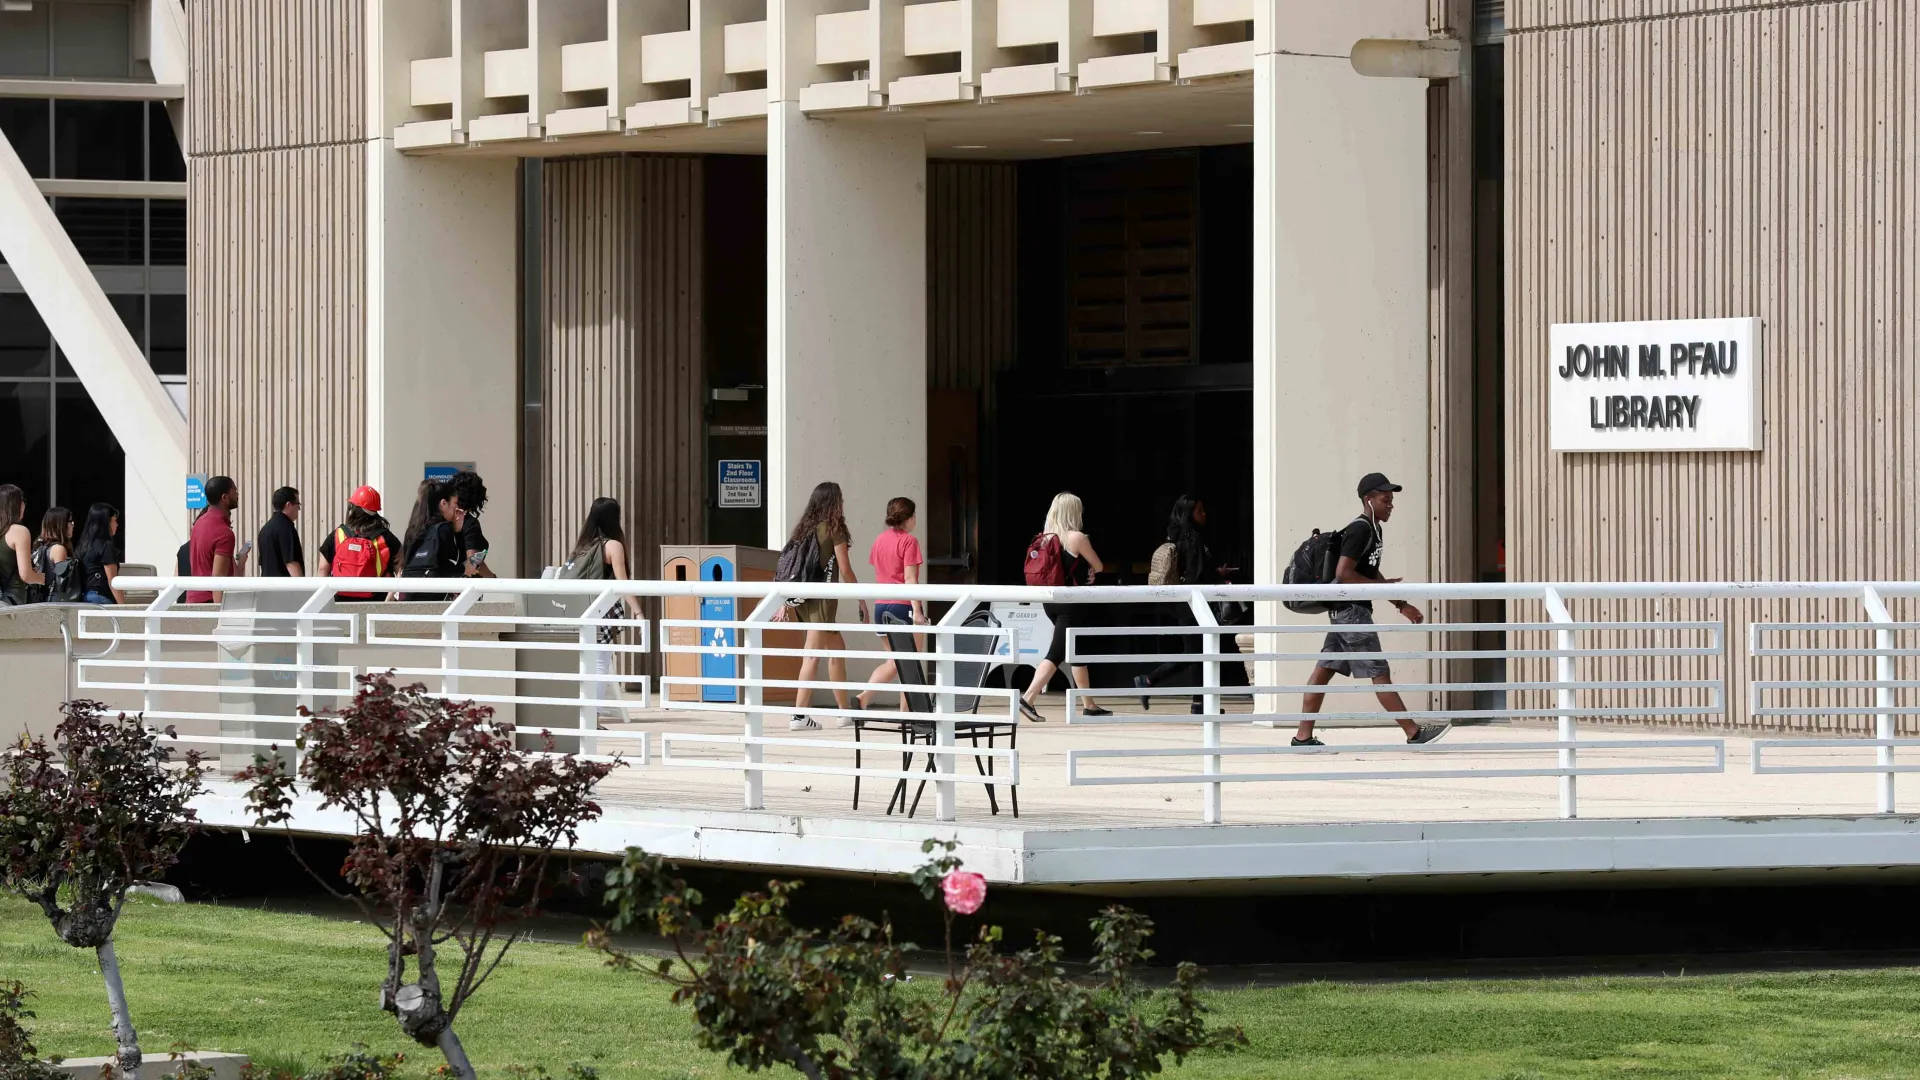 Students at the Pfau Library entrance